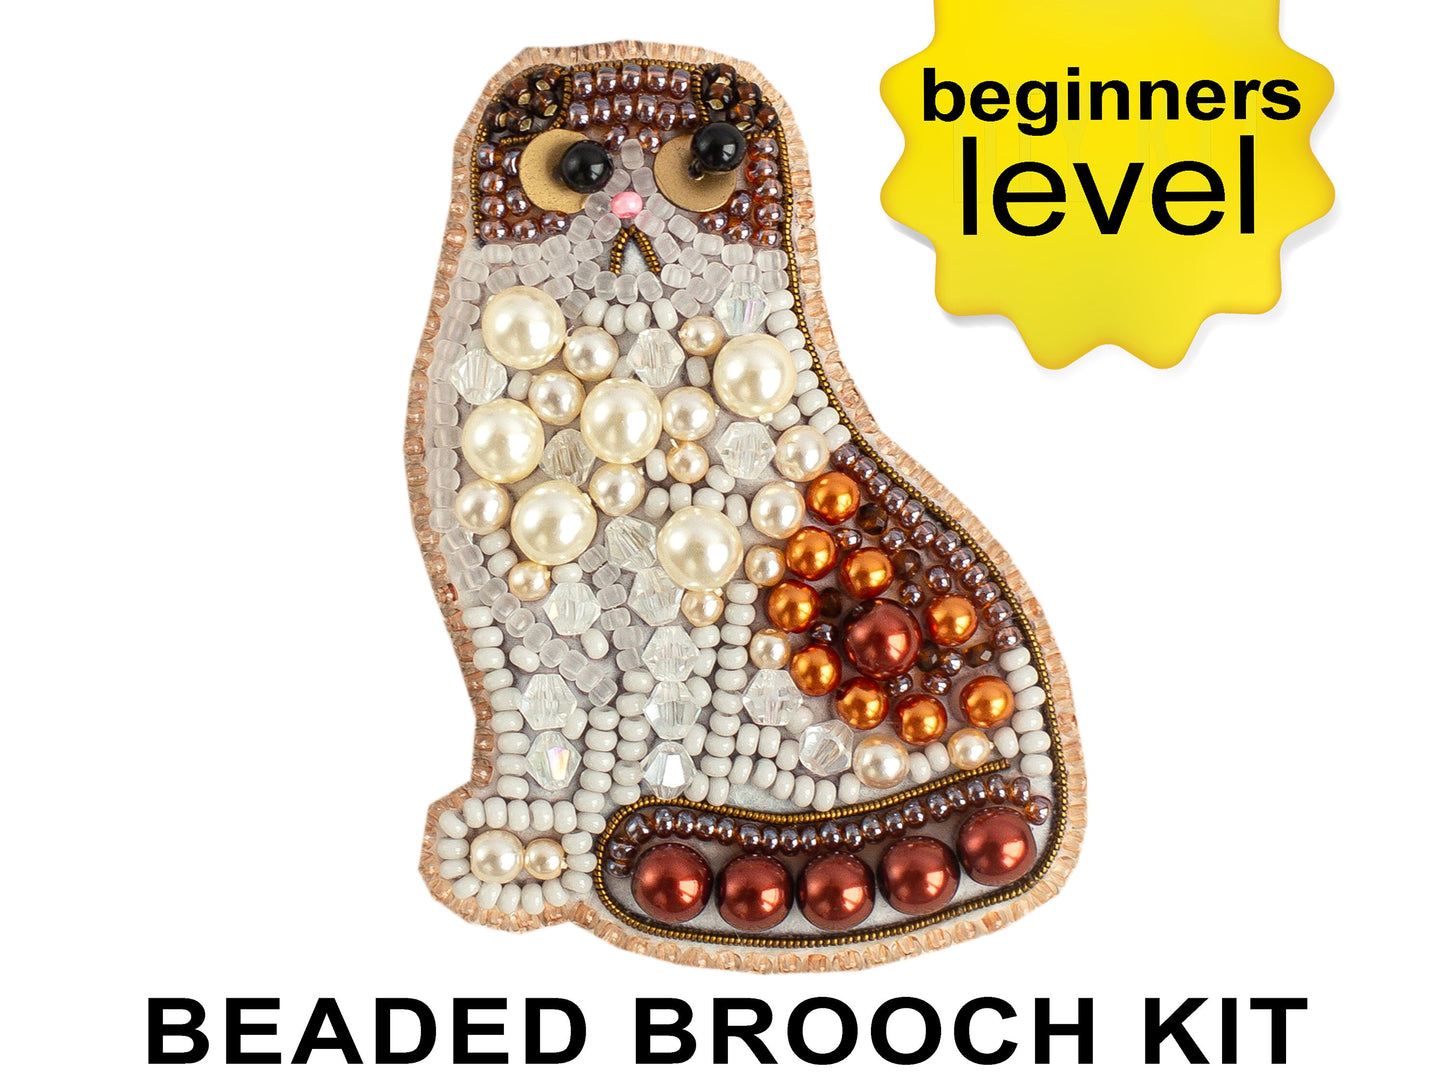 Scottish Fold Cat Bead embroidery kit. Seed Bead Brooch kit. DIY Craft kit. Beadweaving Kit. Needlework beading. Handmade Jewelry Making Kit